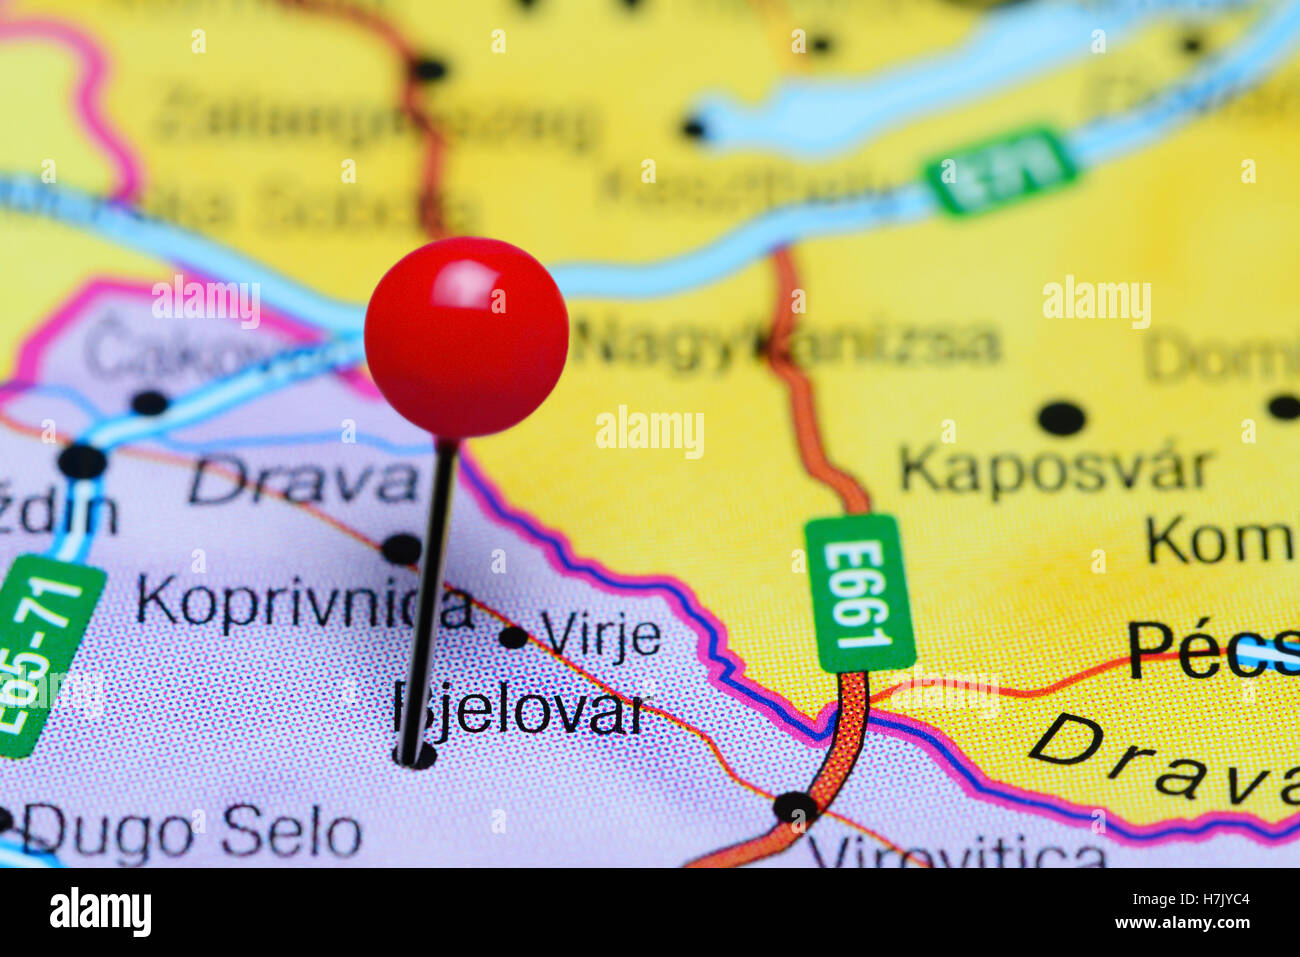 Bjelovar pinned on a map of Croatia Stock Photo